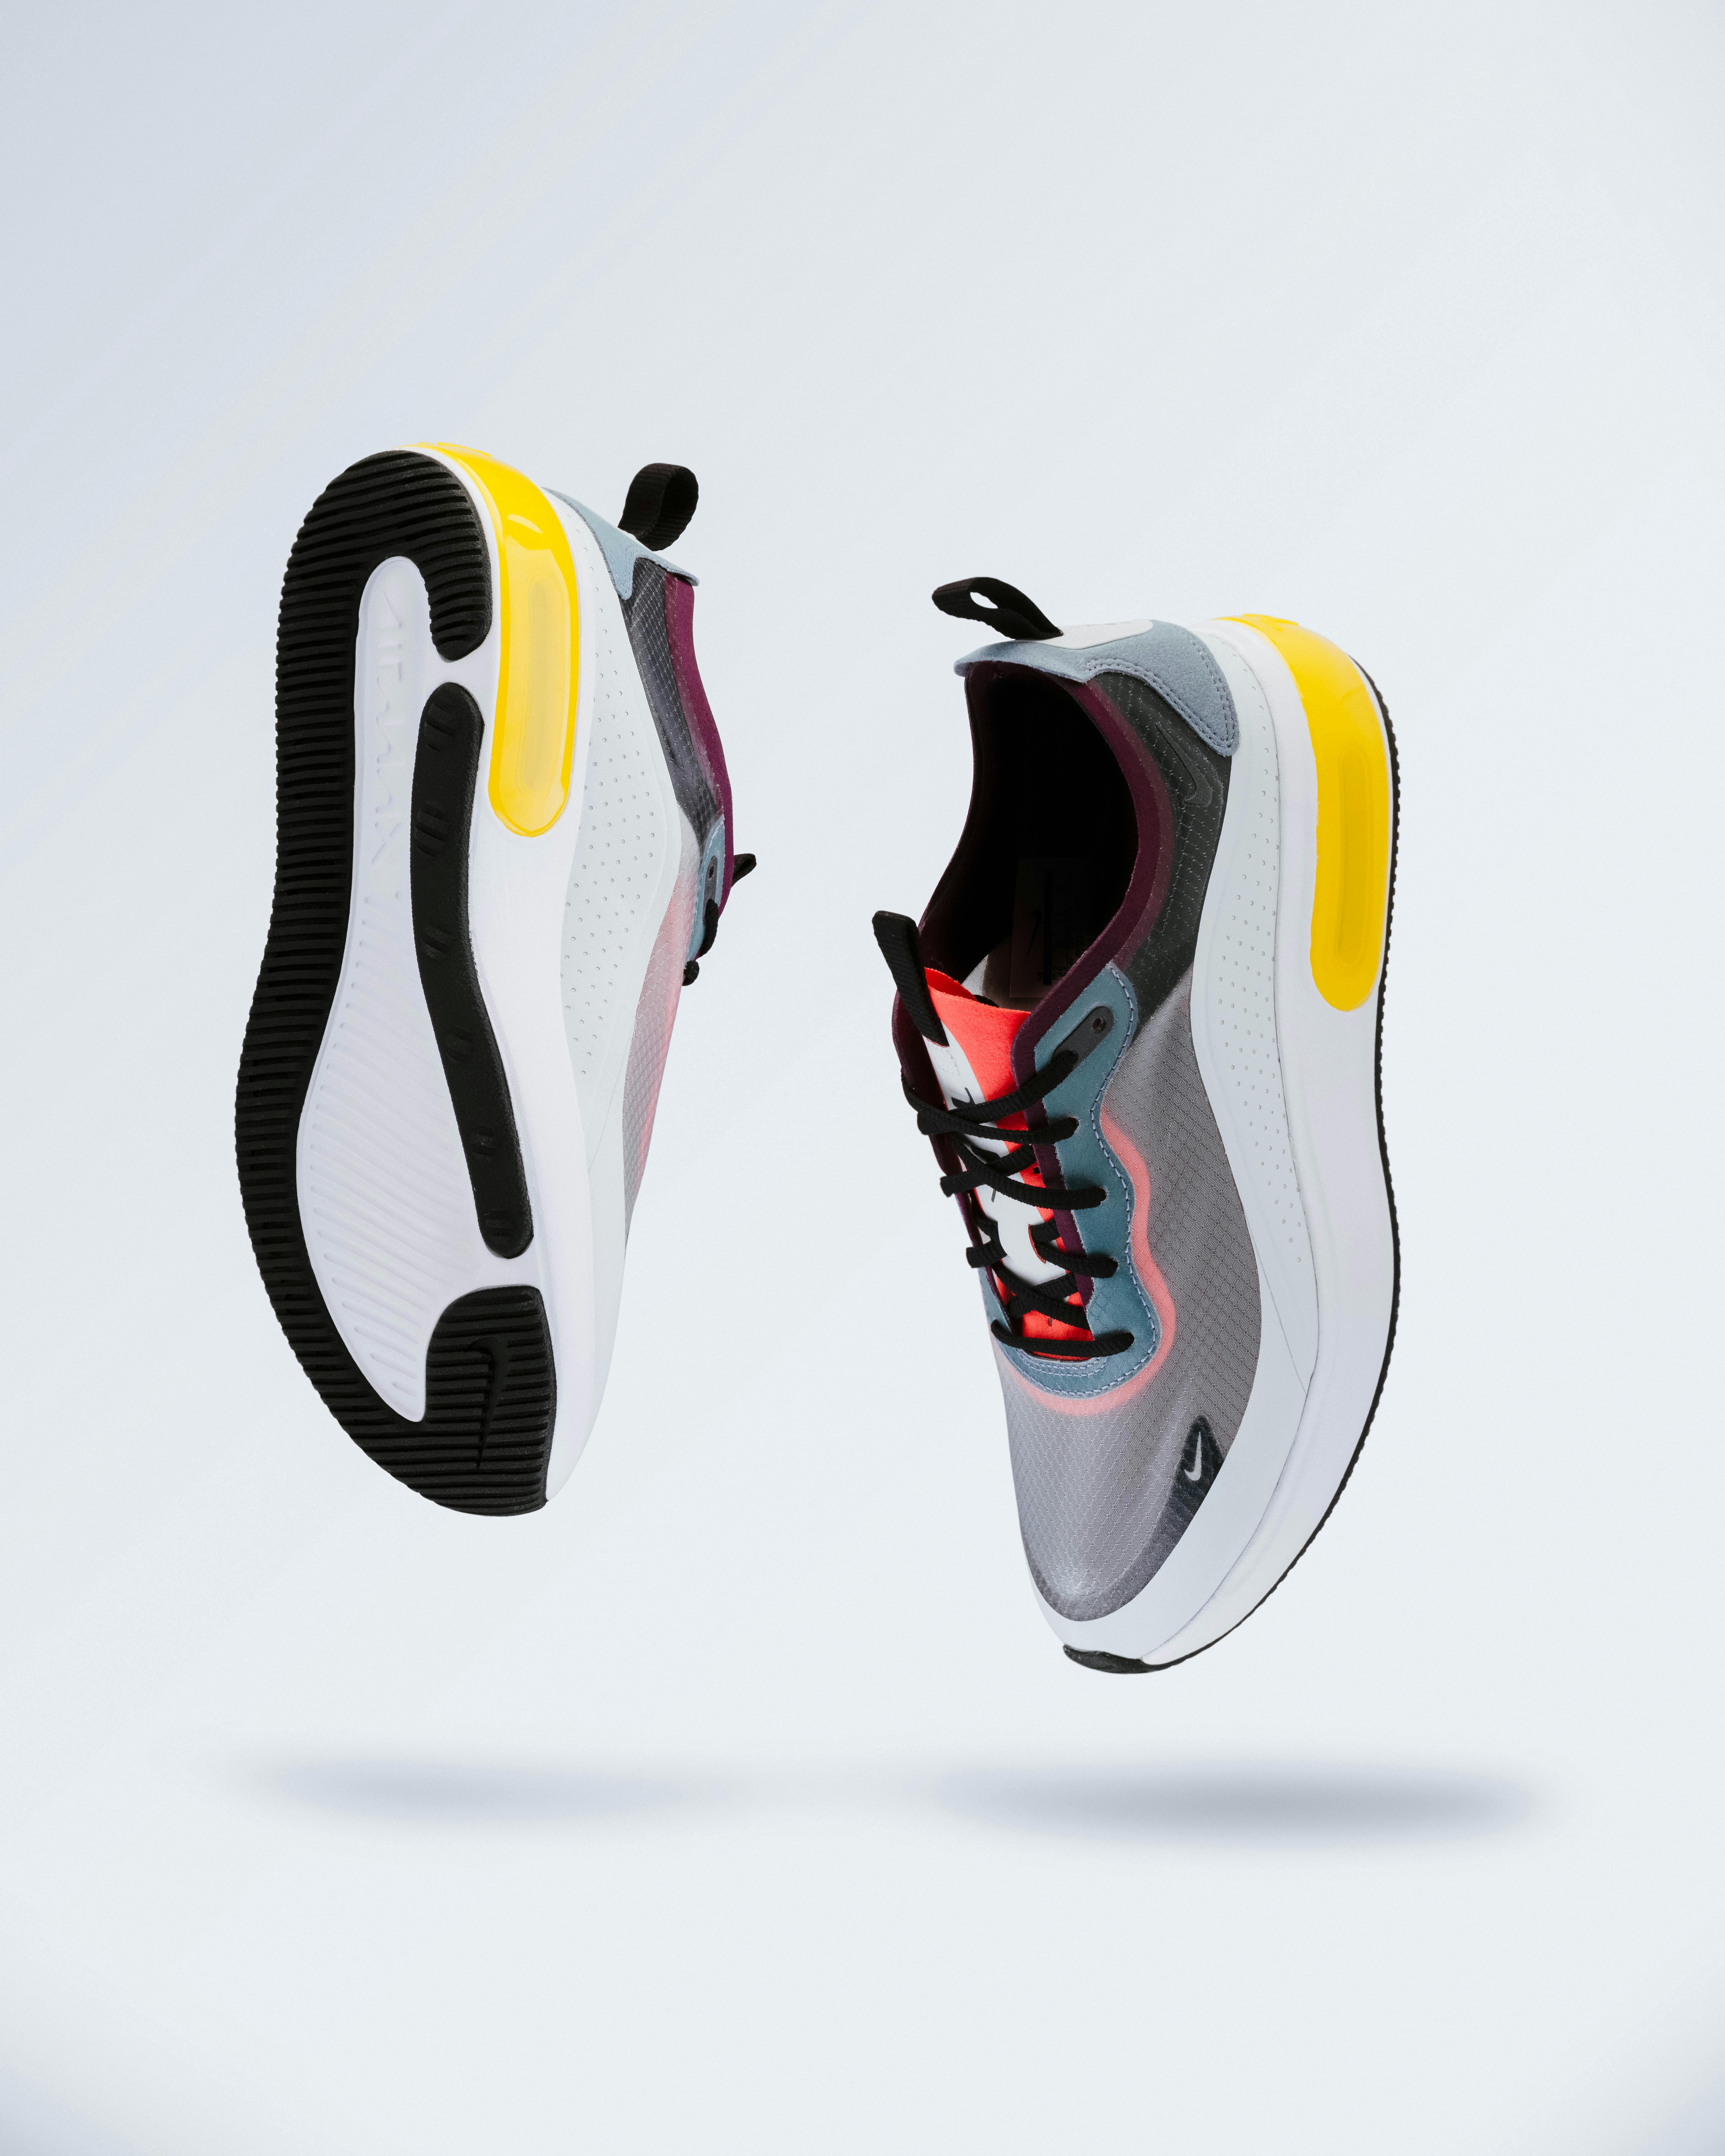 Nike's latest Joyride Run Flyknit sneaker creates the feeling of 